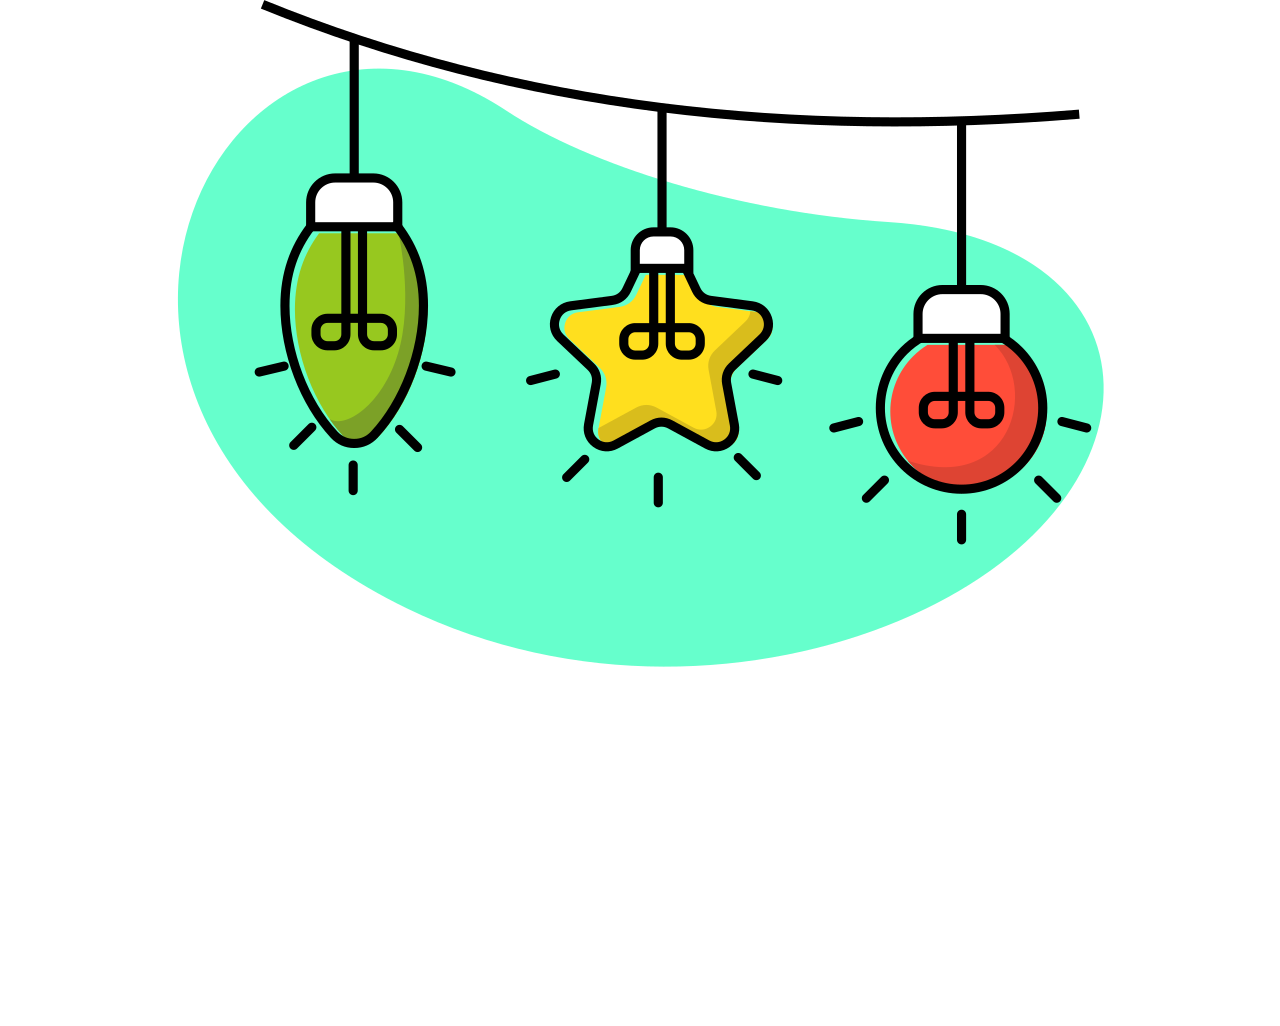 Christmas Lights
Installation, maintenance & removal's logo